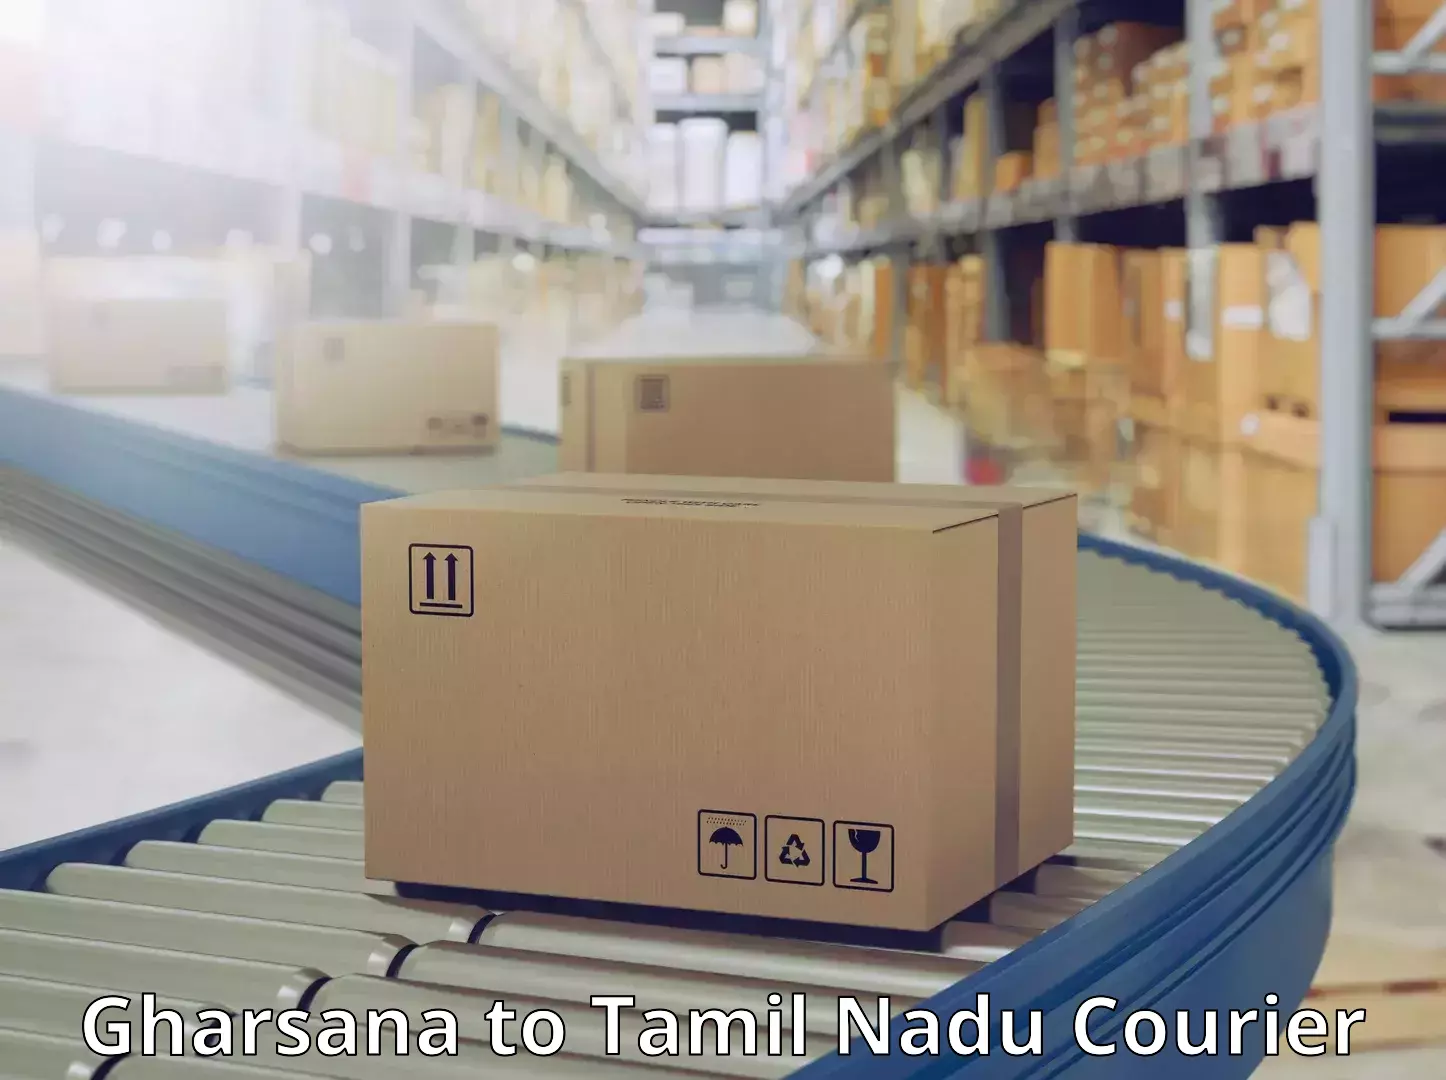 Same-day delivery options Gharsana to Thiruvadanai